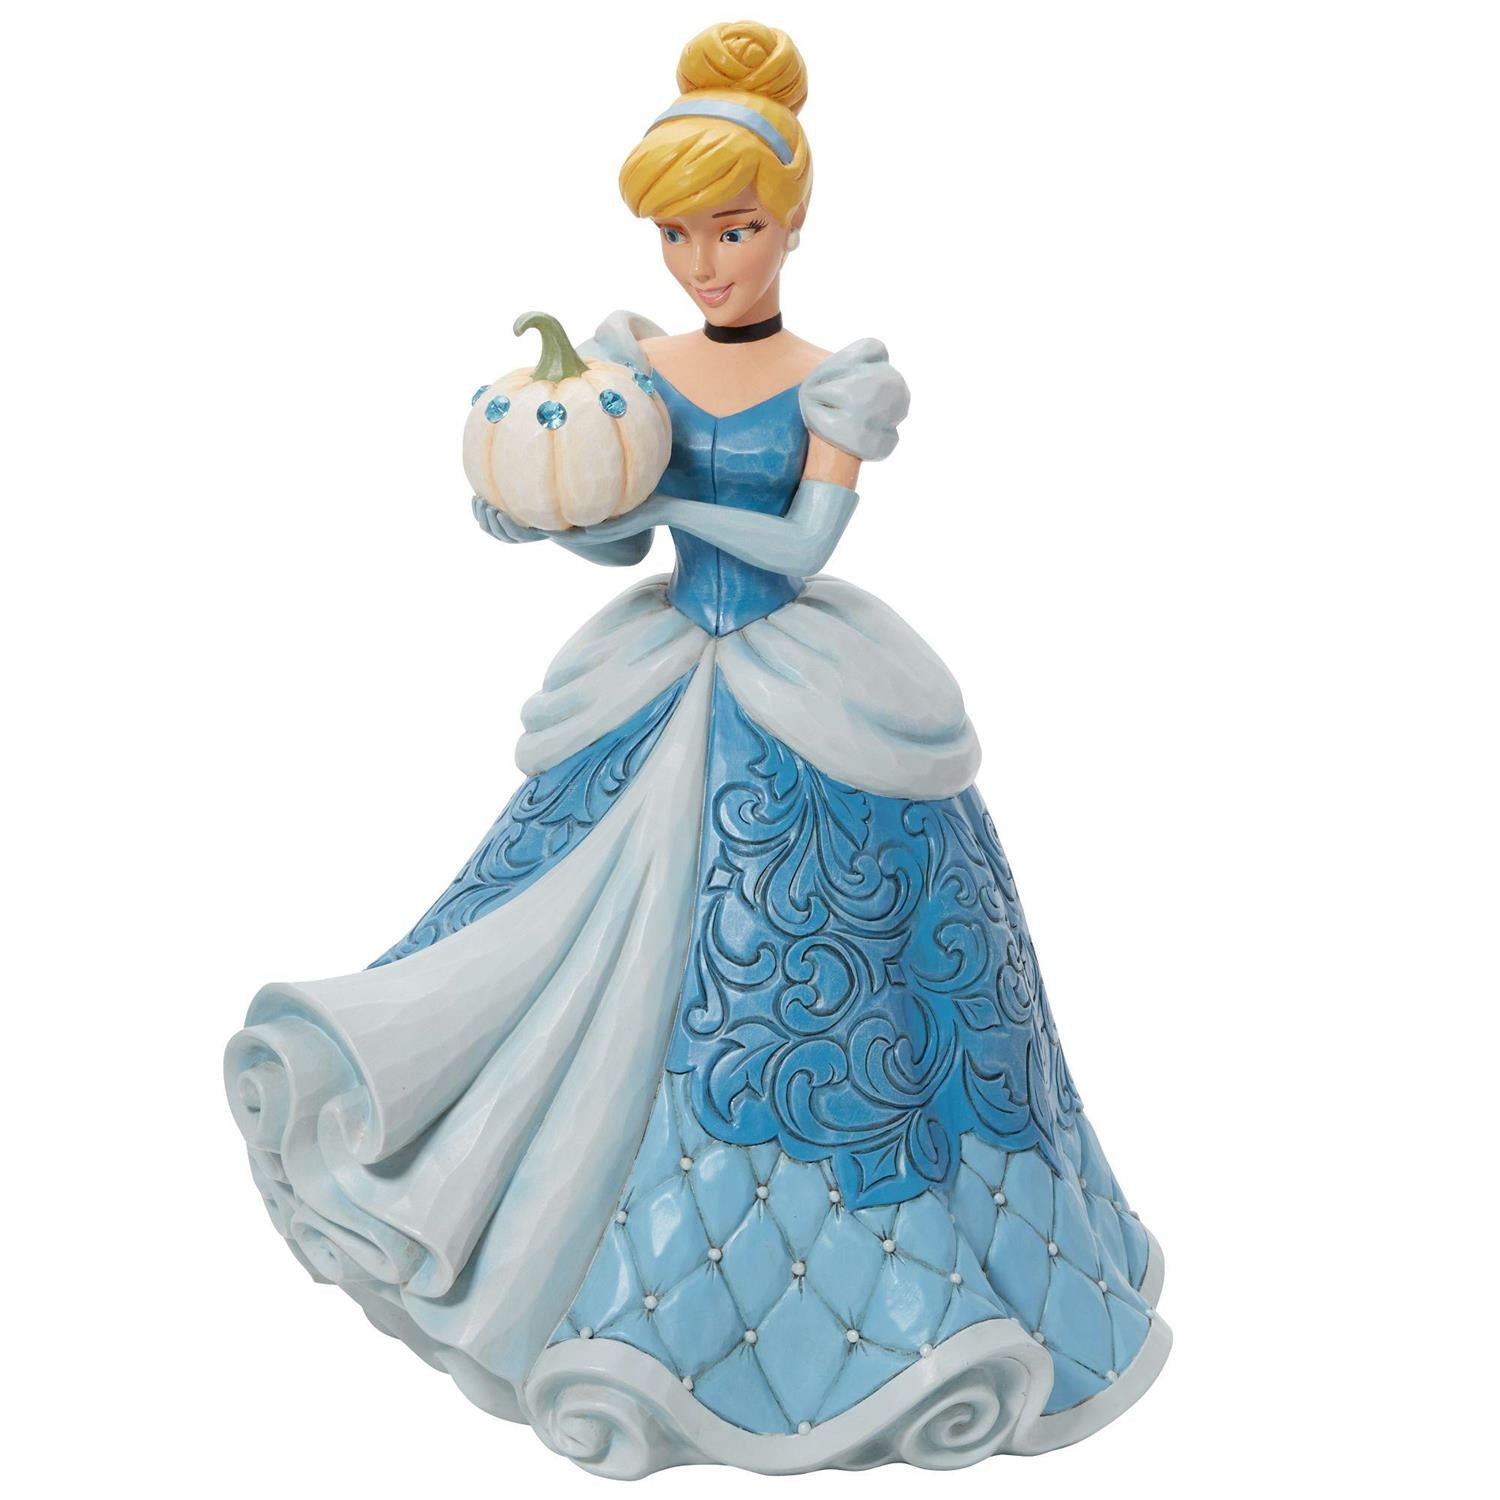 Cinderella holding a pumpkin